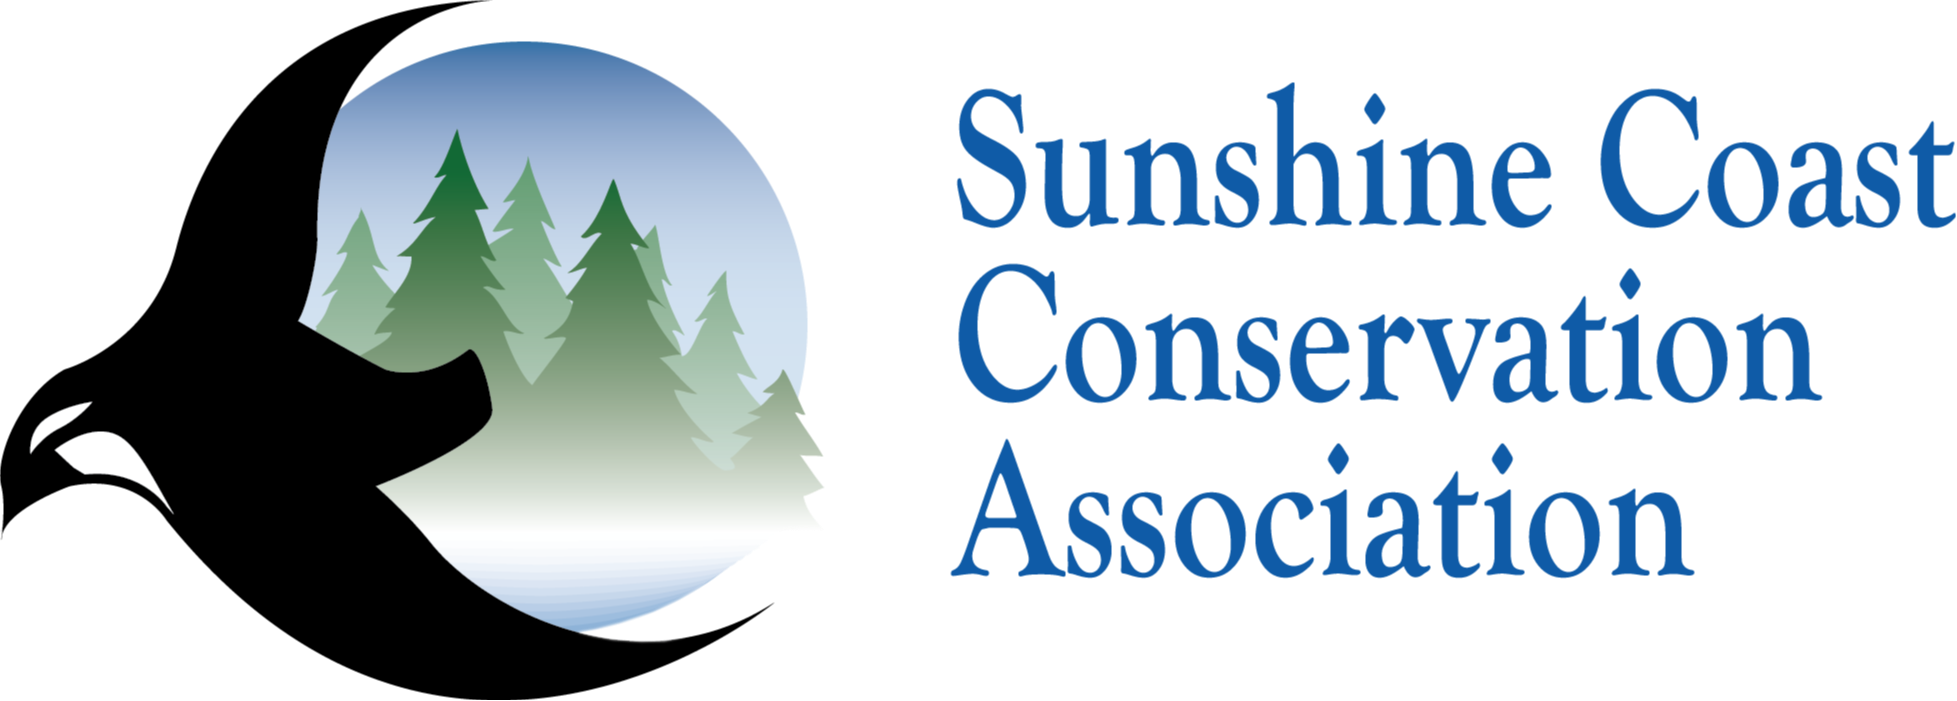 Sunshine Coast Conservation Association logo